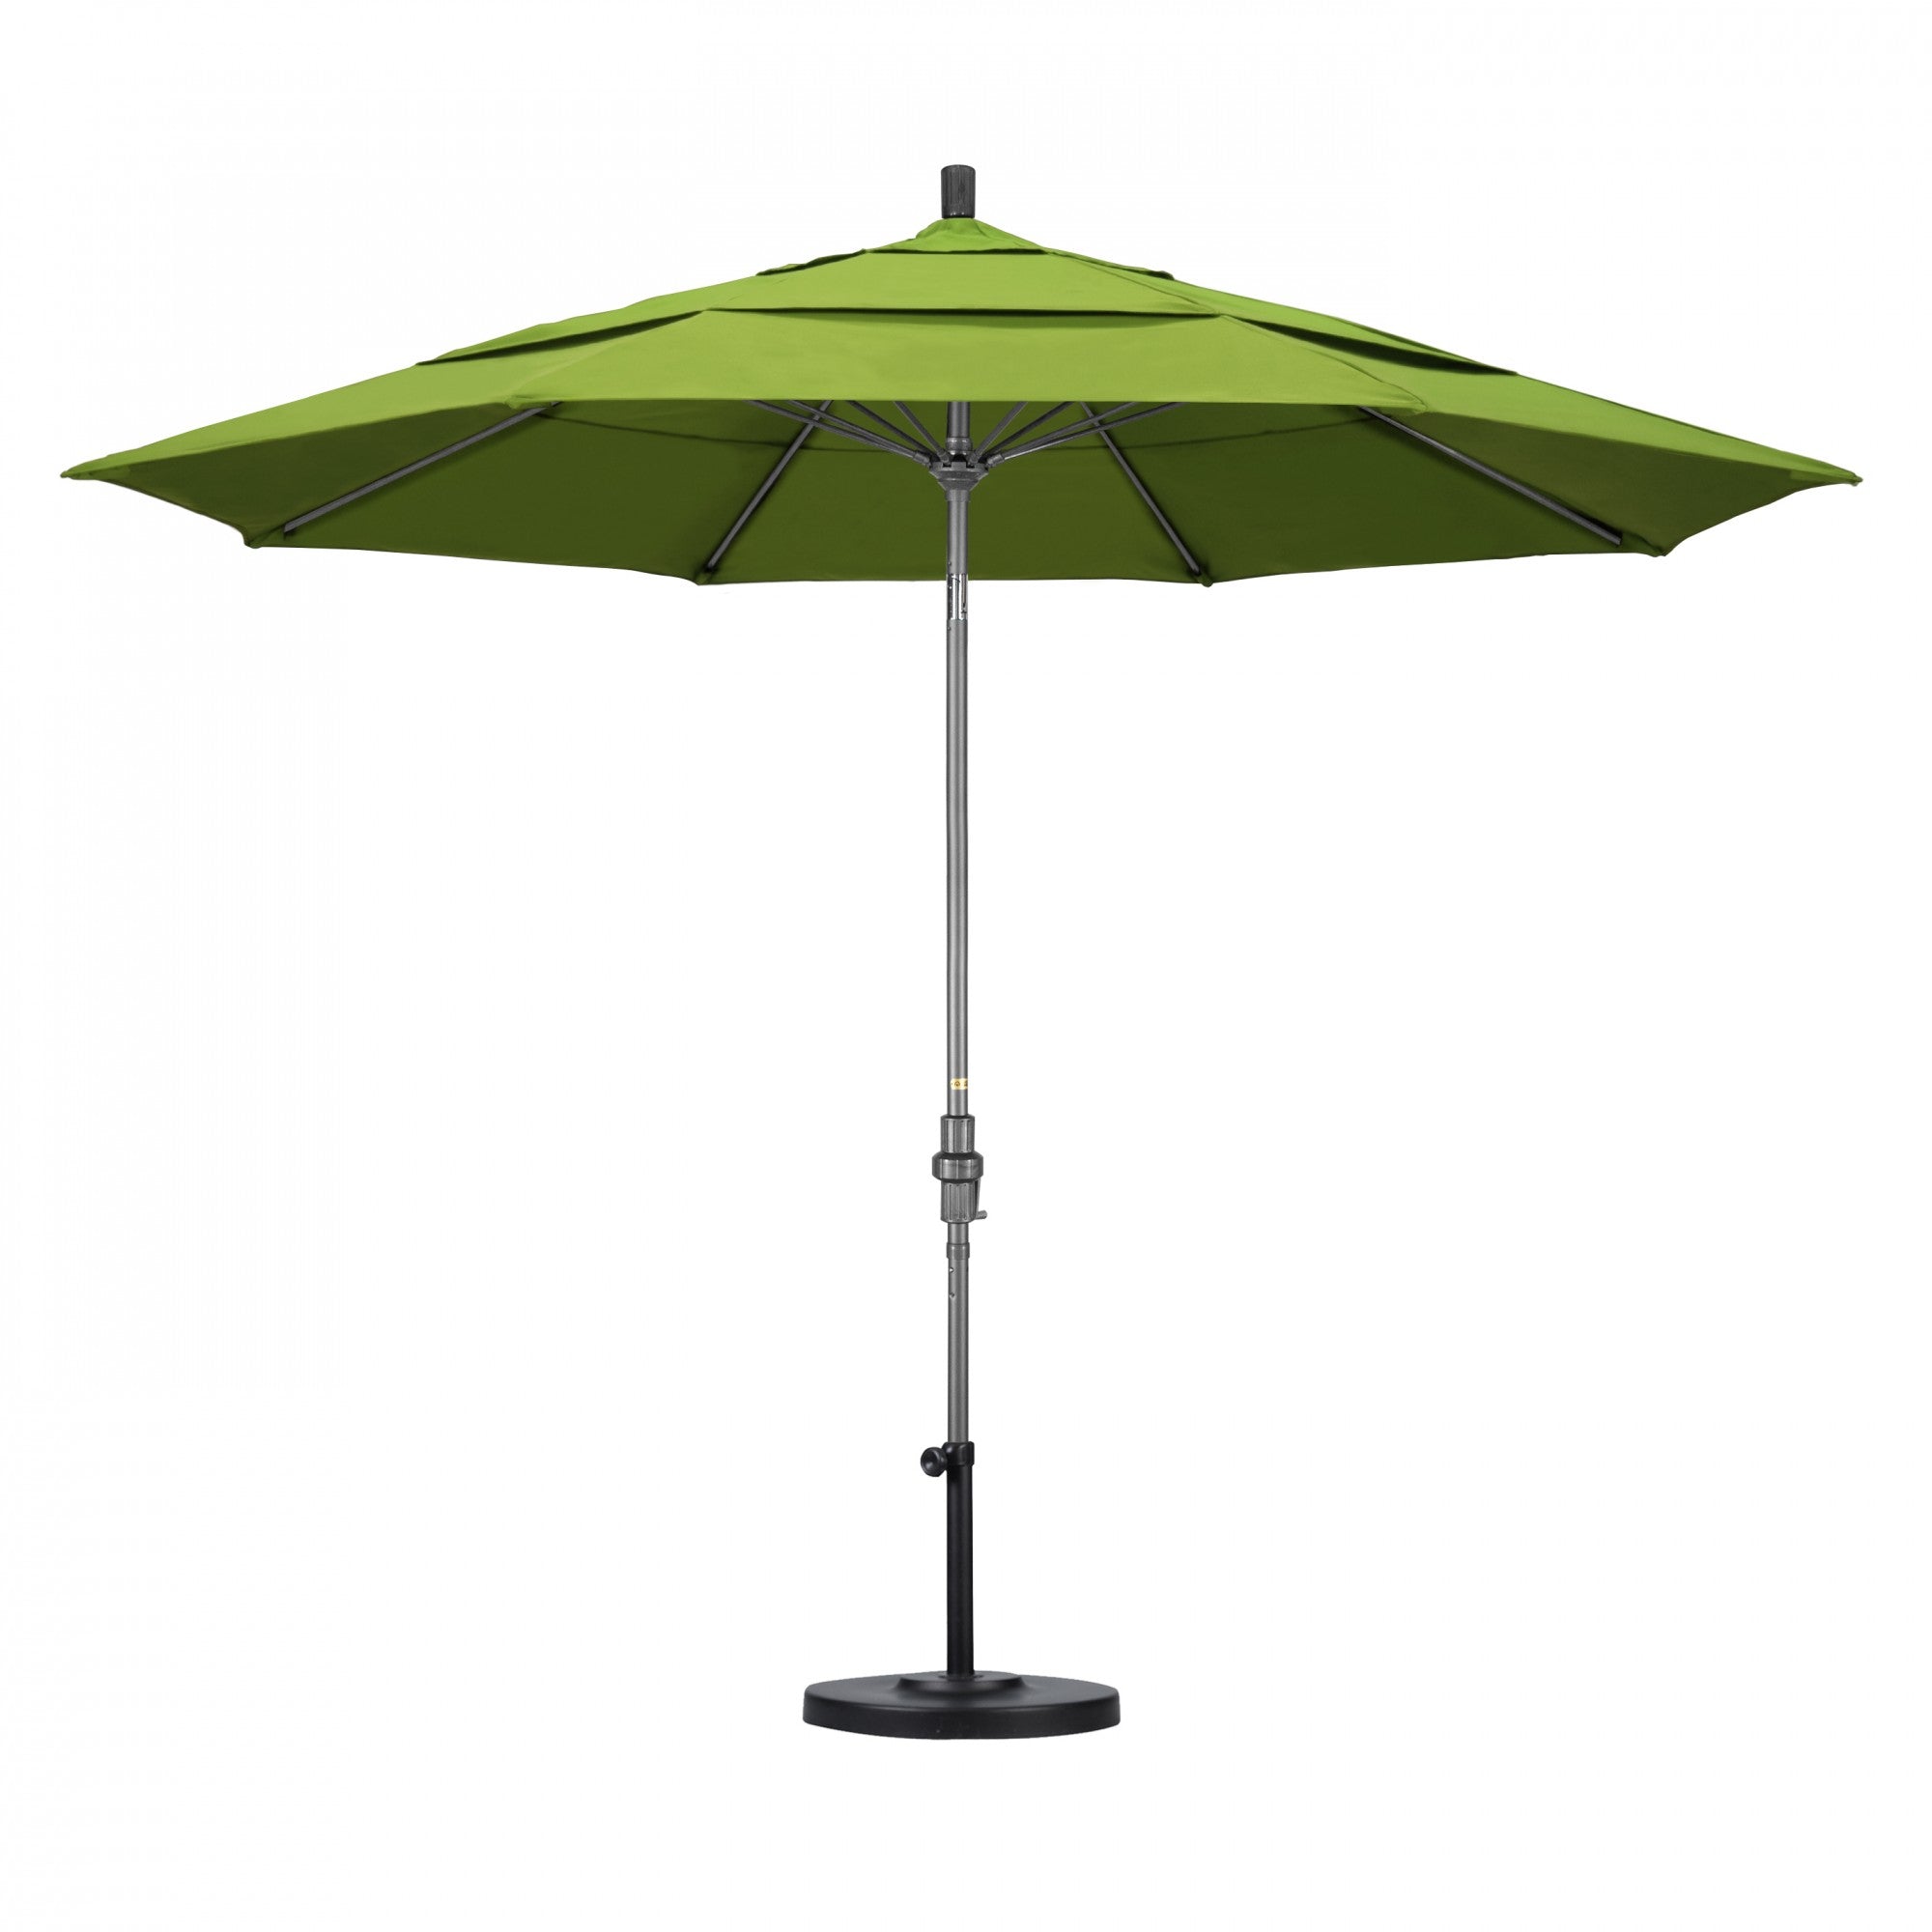 California Umbrella - 11' - Patio Umbrella Umbrella - Aluminum Pole - Macaw - Sunbrella  - GSCUF118010-5429-DWV